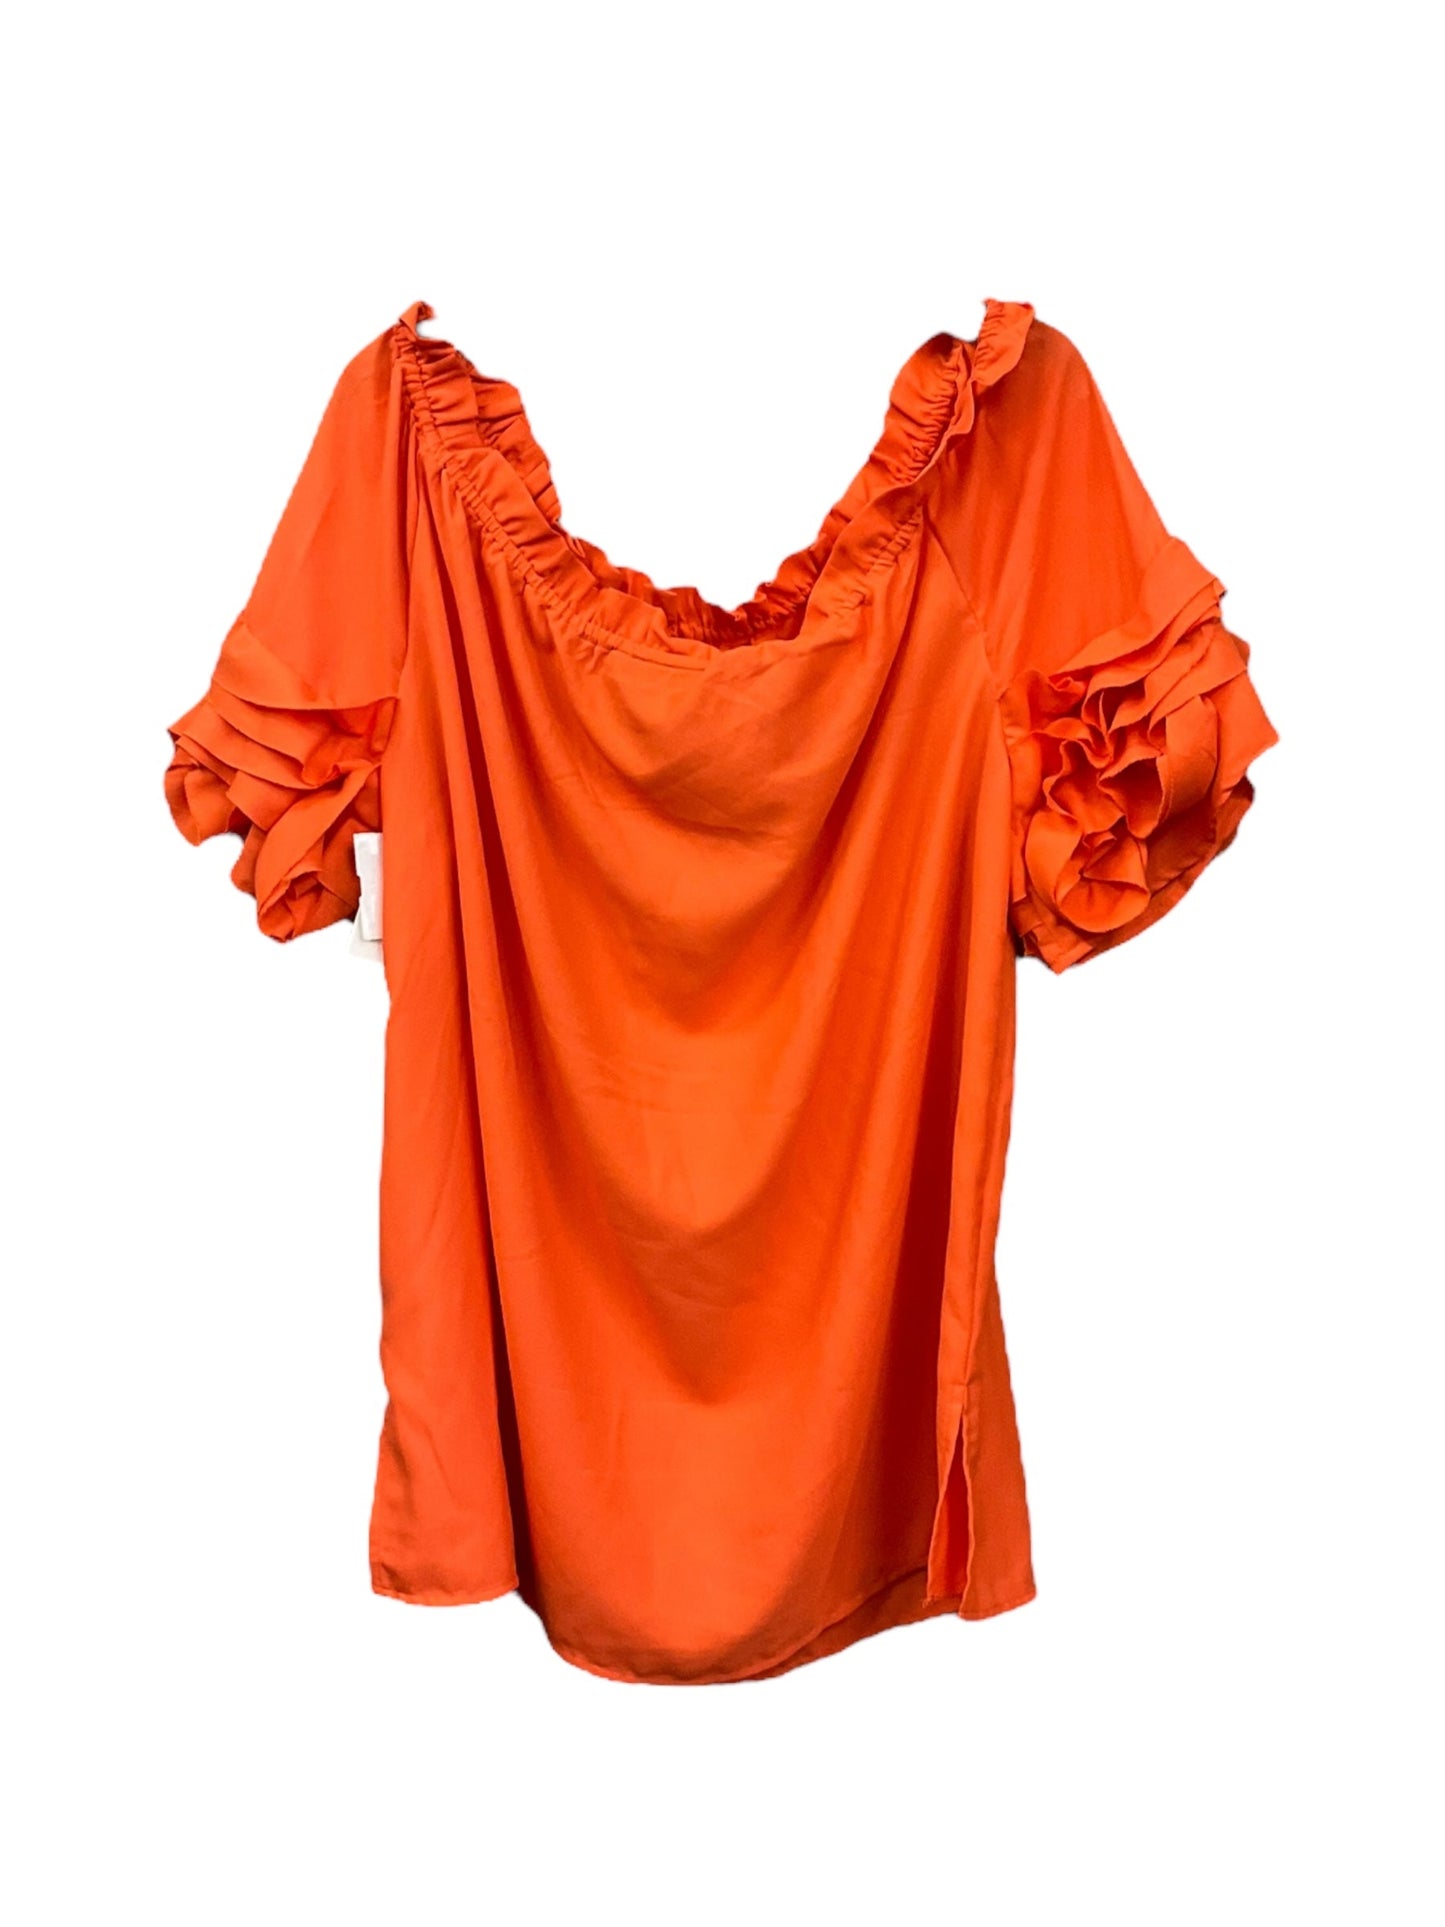 Orange Top Short Sleeve Ashley Stewart, Size 1x